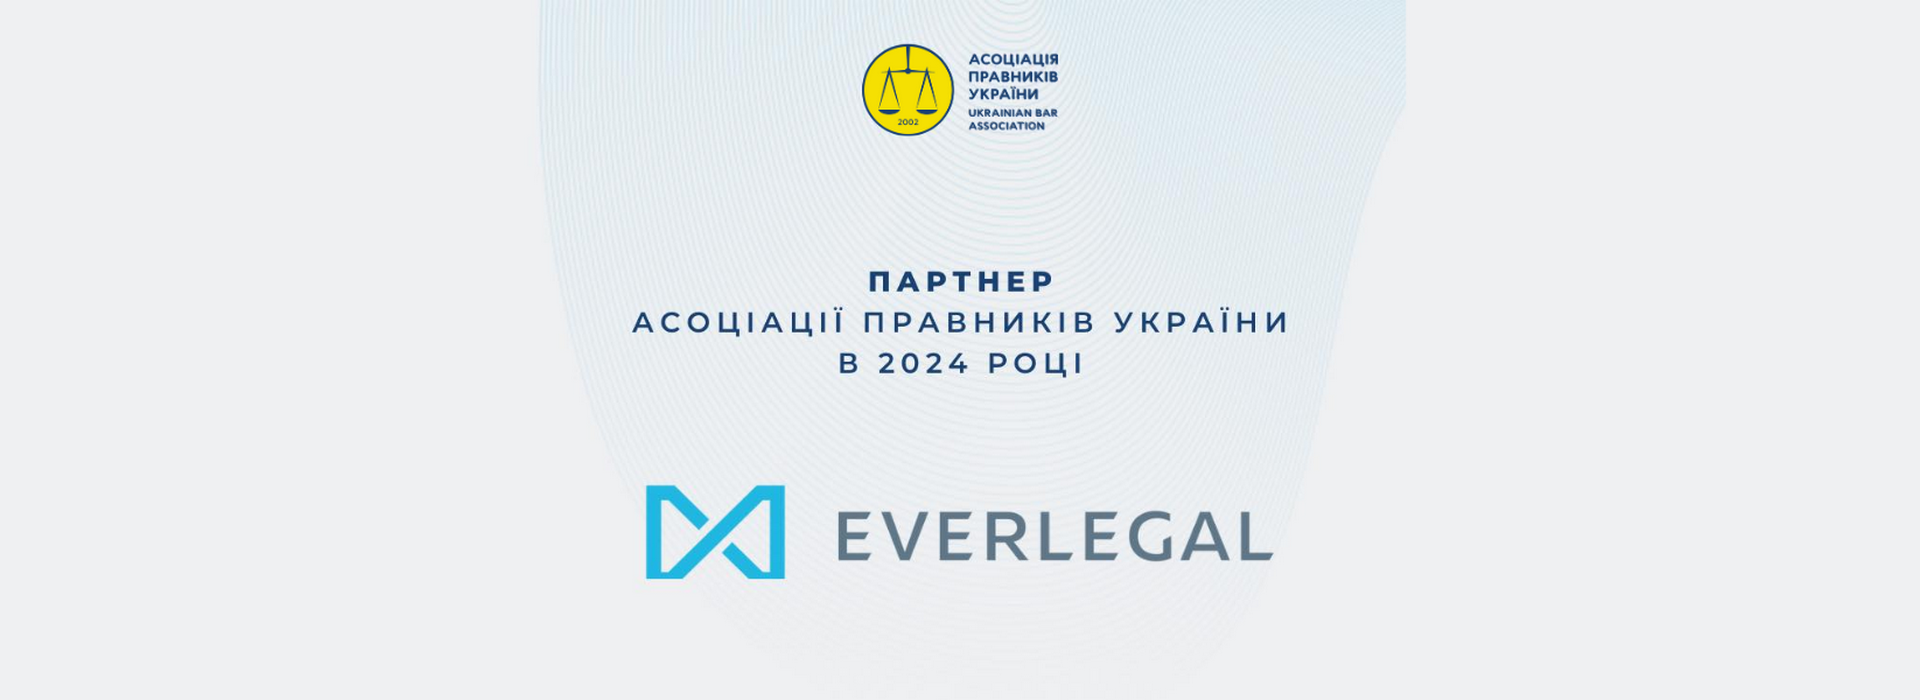 EVERLEGAL Is a Partner of the Ukrainian Bar Association in 2024!